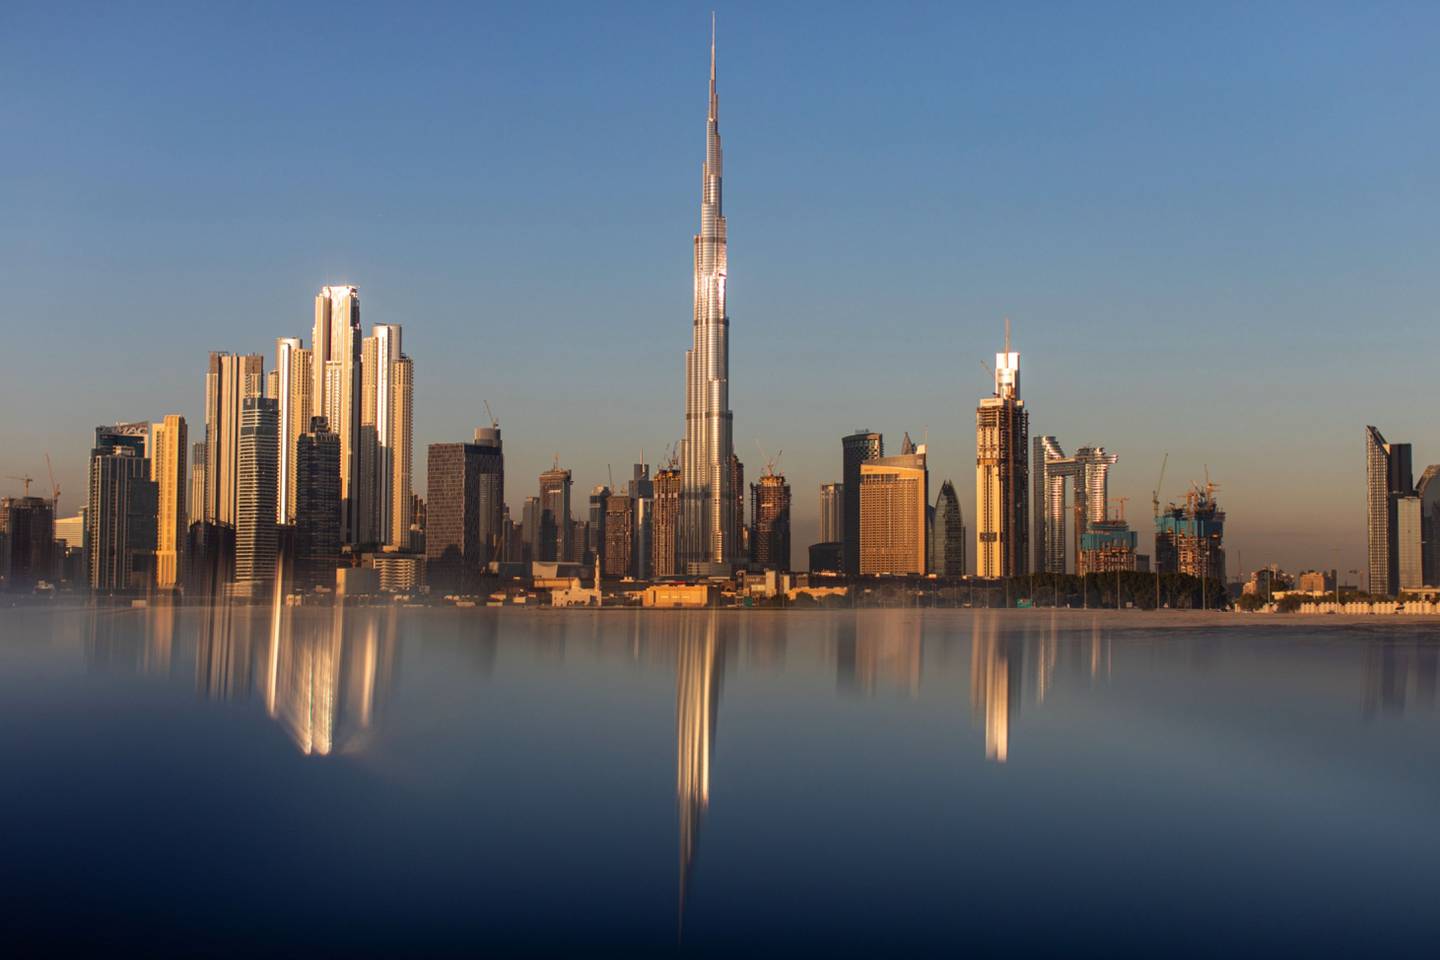 Vista do Burj Khalifa no skyline de Dubaidfd